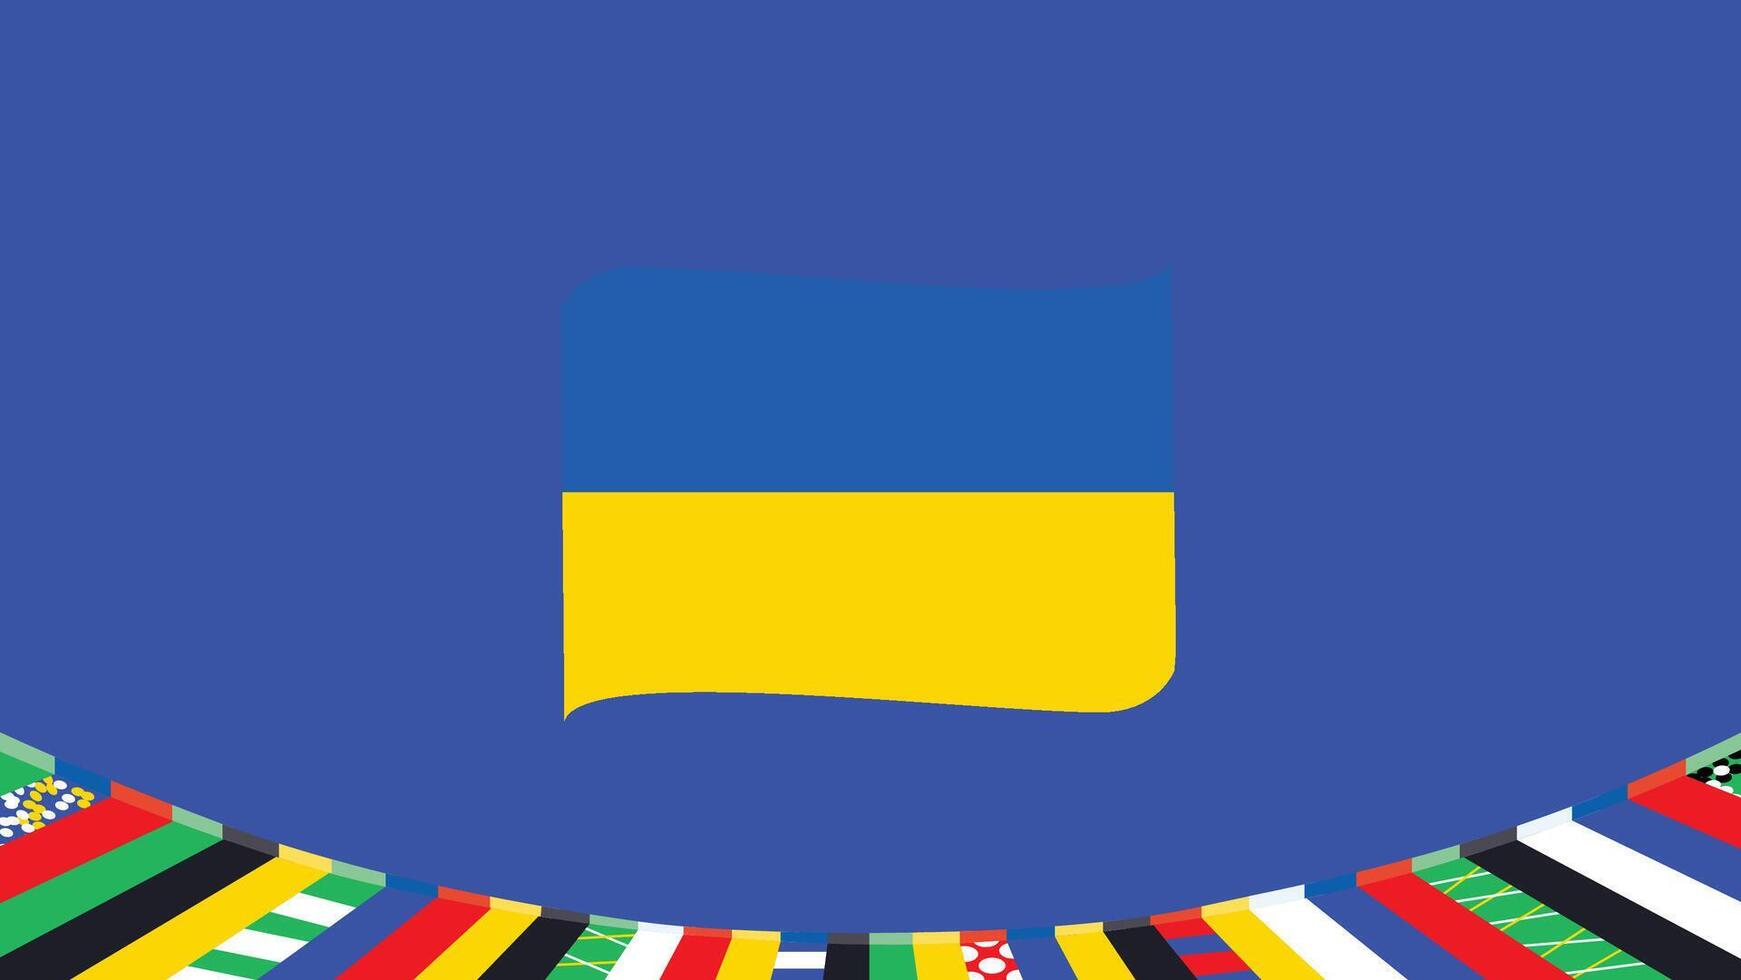 ukraina emblem band europeisk nationer 2024 lag länder europeisk Tyskland fotboll symbol logotyp design illustration vektor